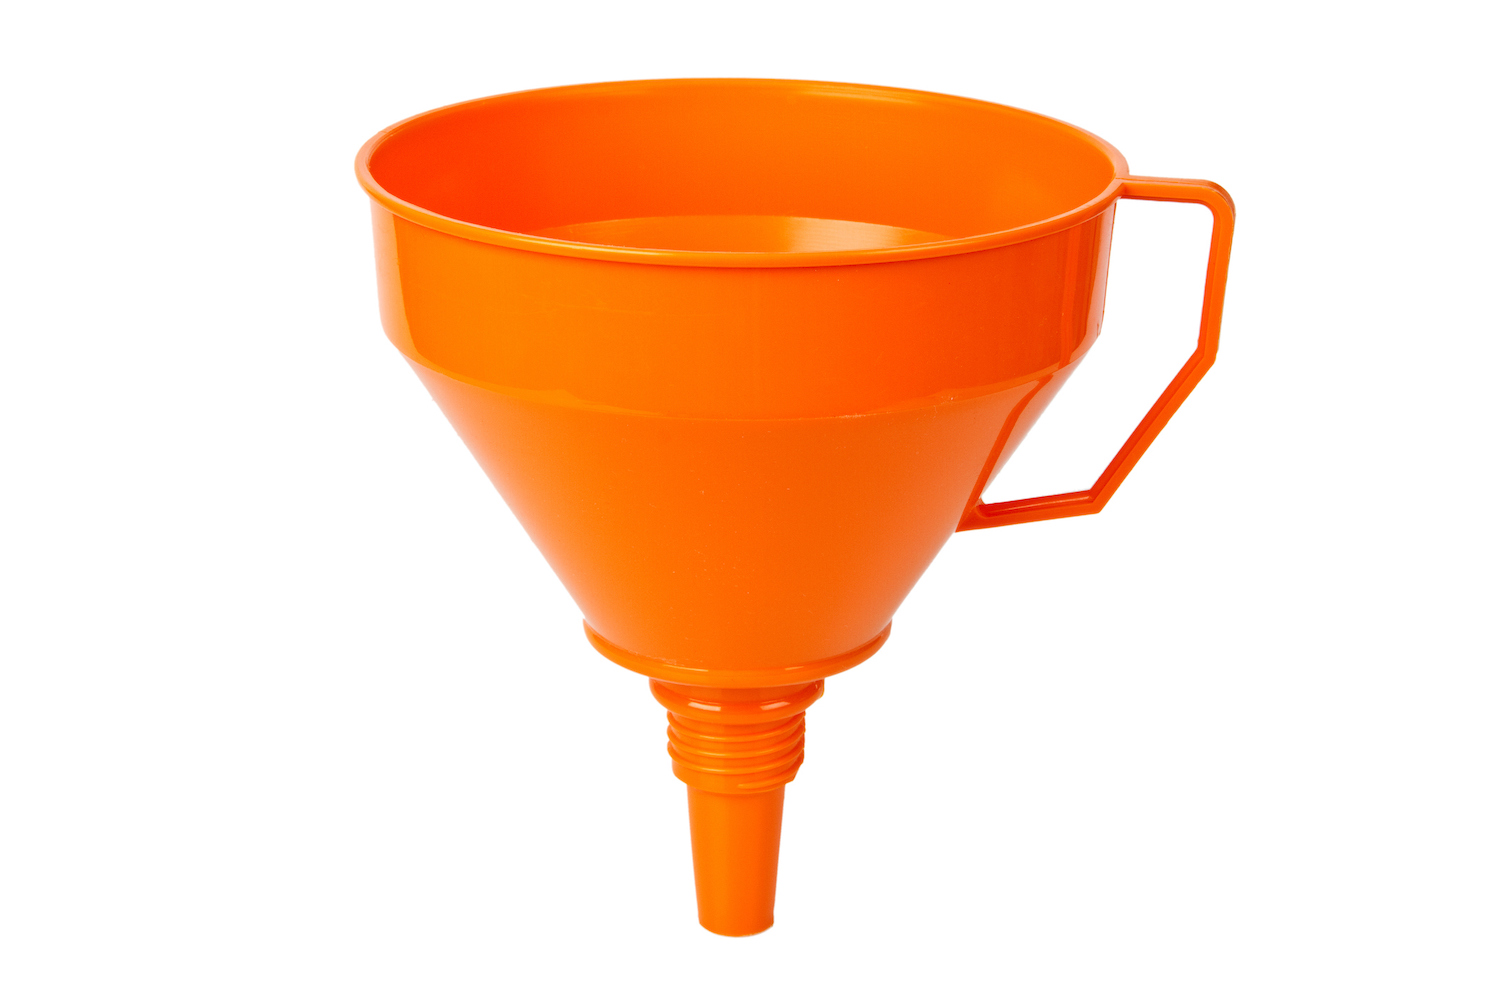 Orange funnel on a bright background